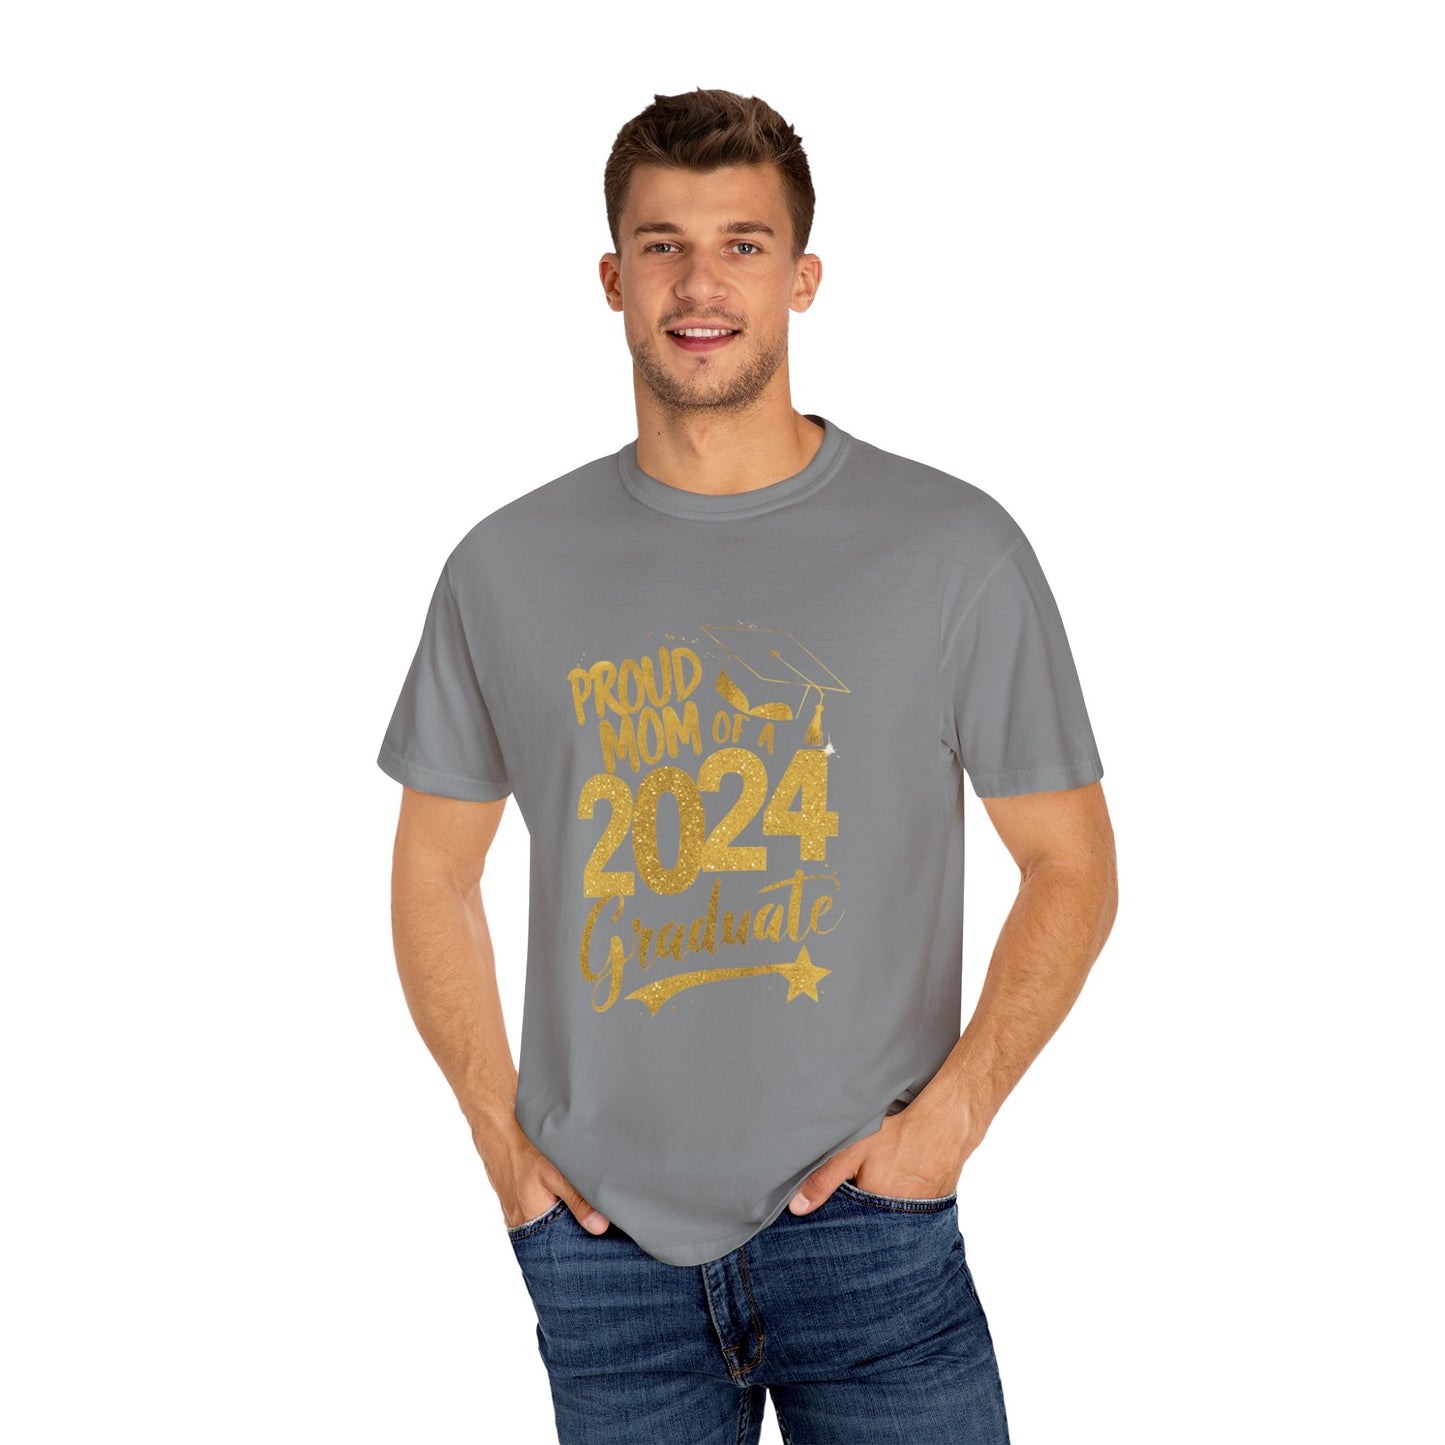 Proud of Mom 2024 Graduate Unisex Garment-dyed T-shirt Cotton Funny Humorous Graphic Soft Premium Unisex Men Women Granite T-shirt Birthday Gift-27